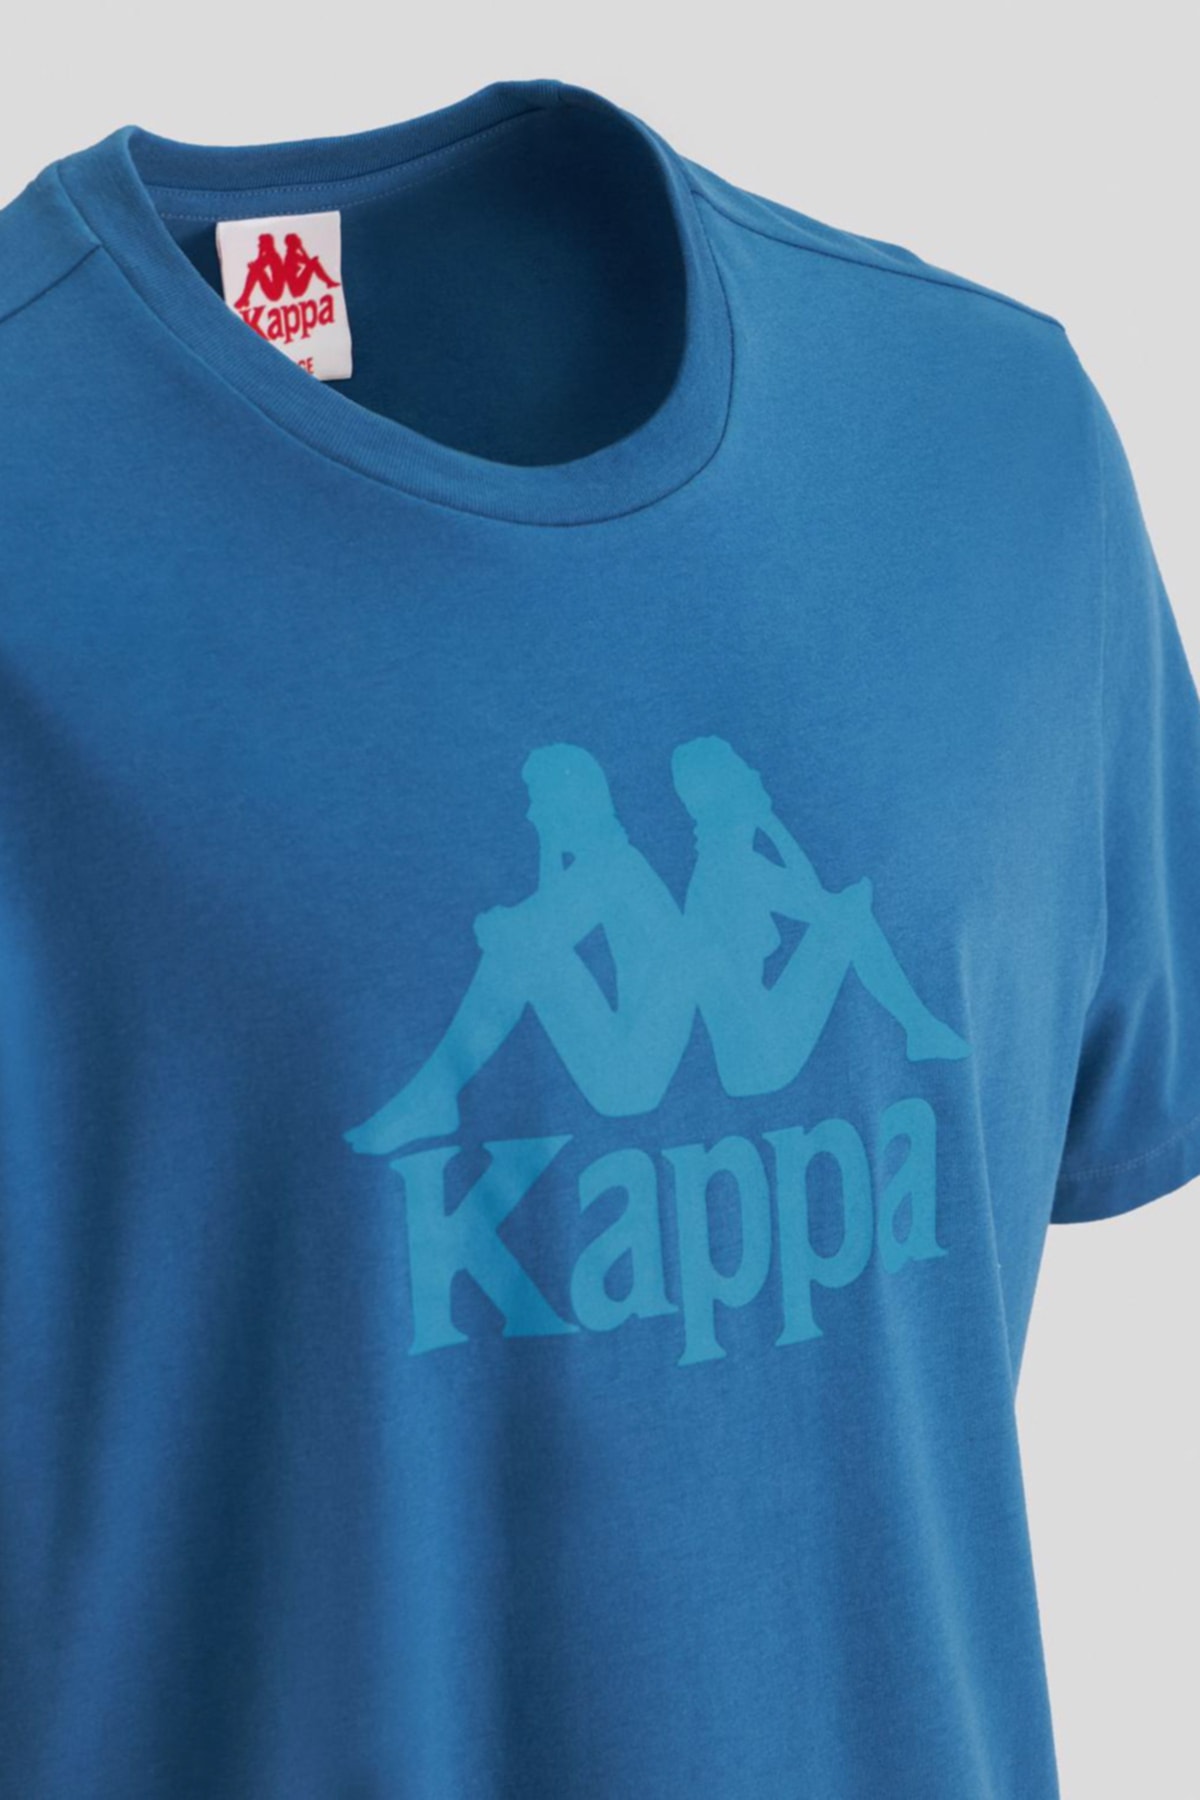 Kappa تی شرت معمولی مردانه یاقوت کبود تاهیتیکس